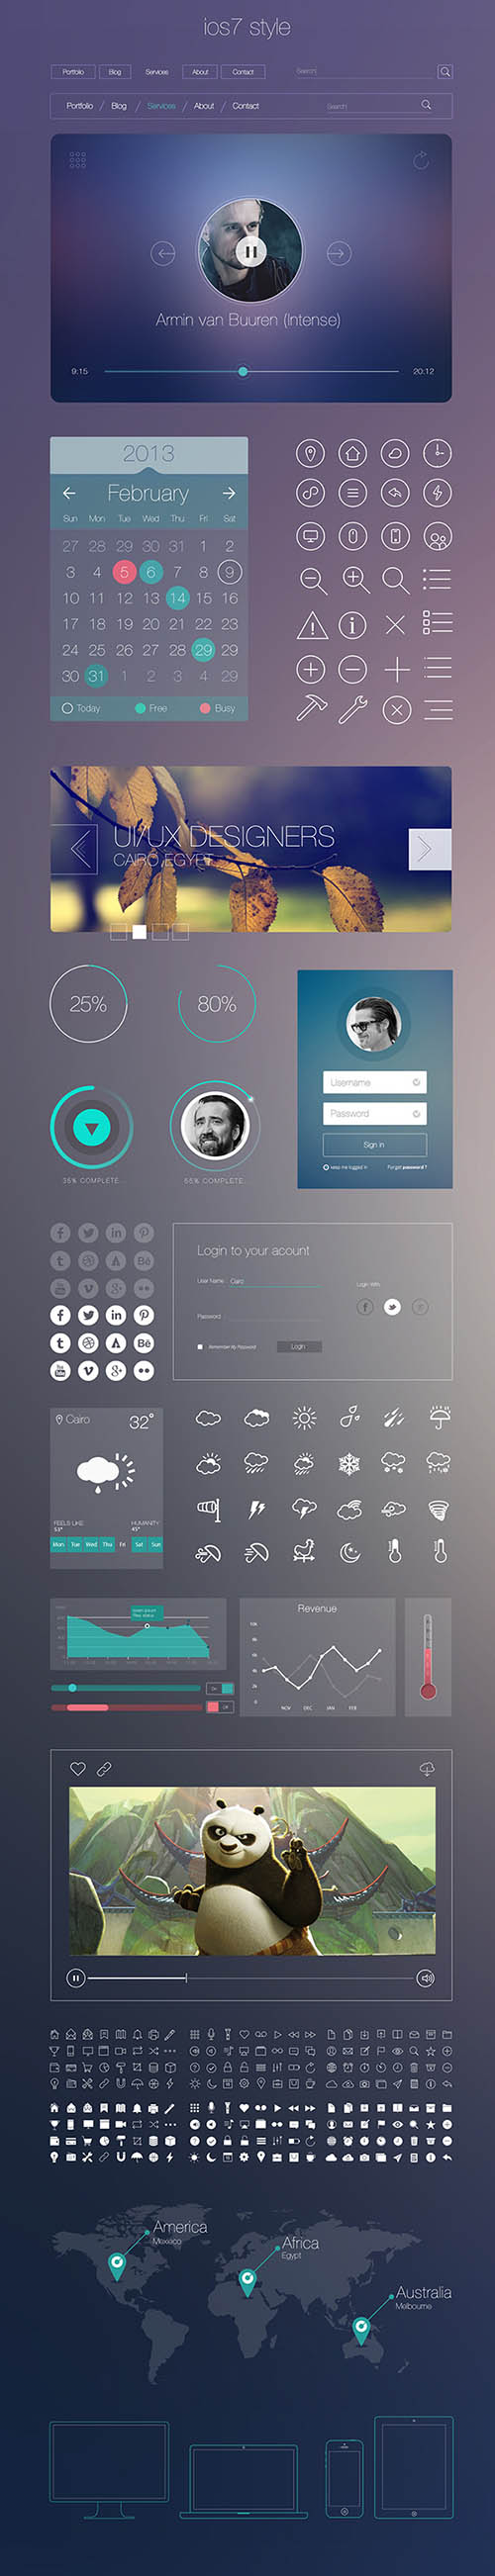 PSD Web Design - iOS 7 Style UI Kit